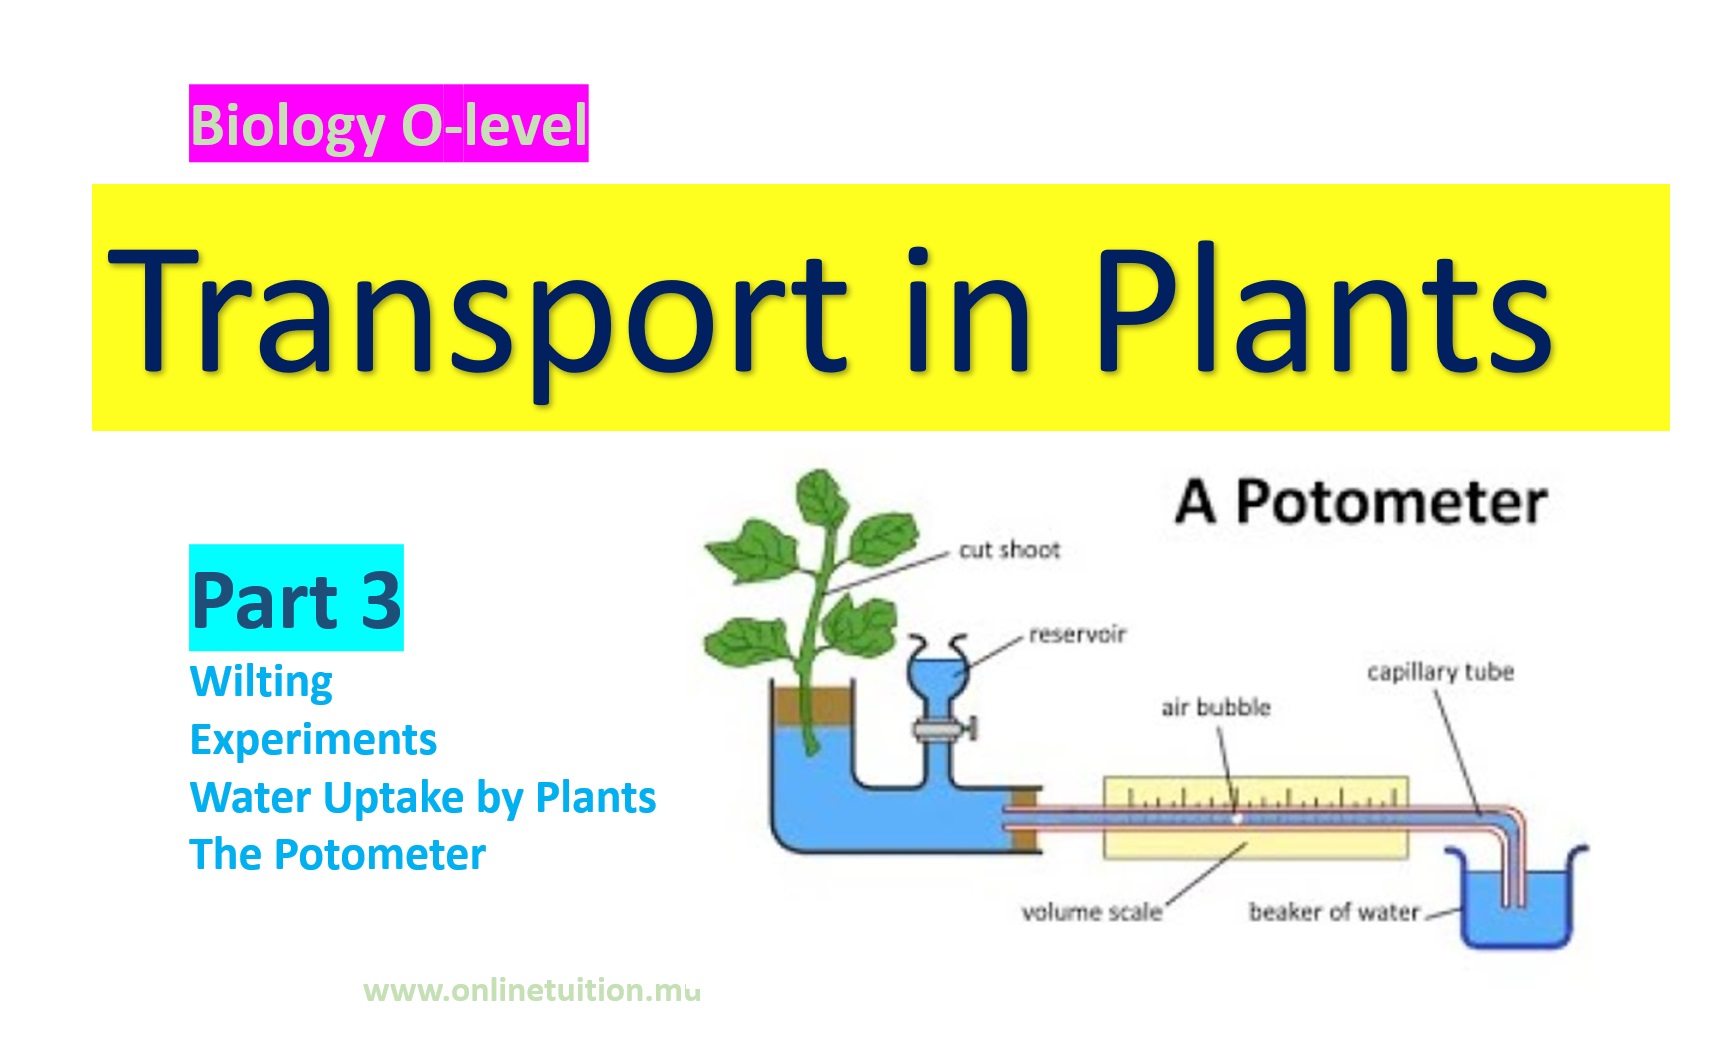 Transport In Plants - Part 3